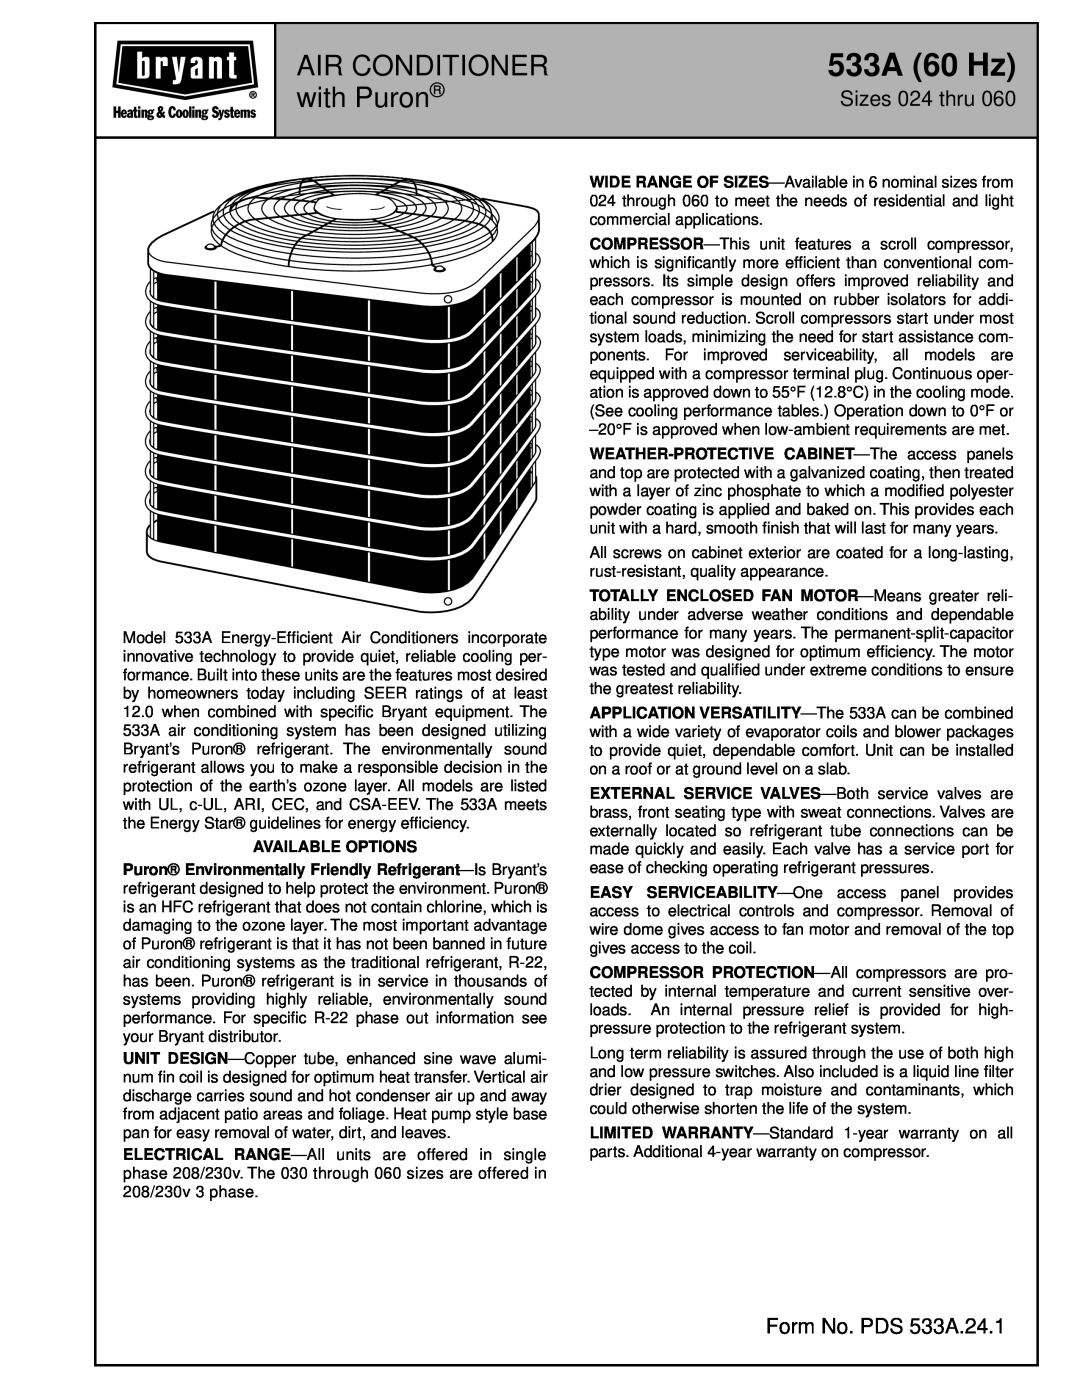 Bryant warranty 533A 60 Hz, Air Conditioner, with Puron, Sizes 024 thru, Form No. PDS 533A.24.1 